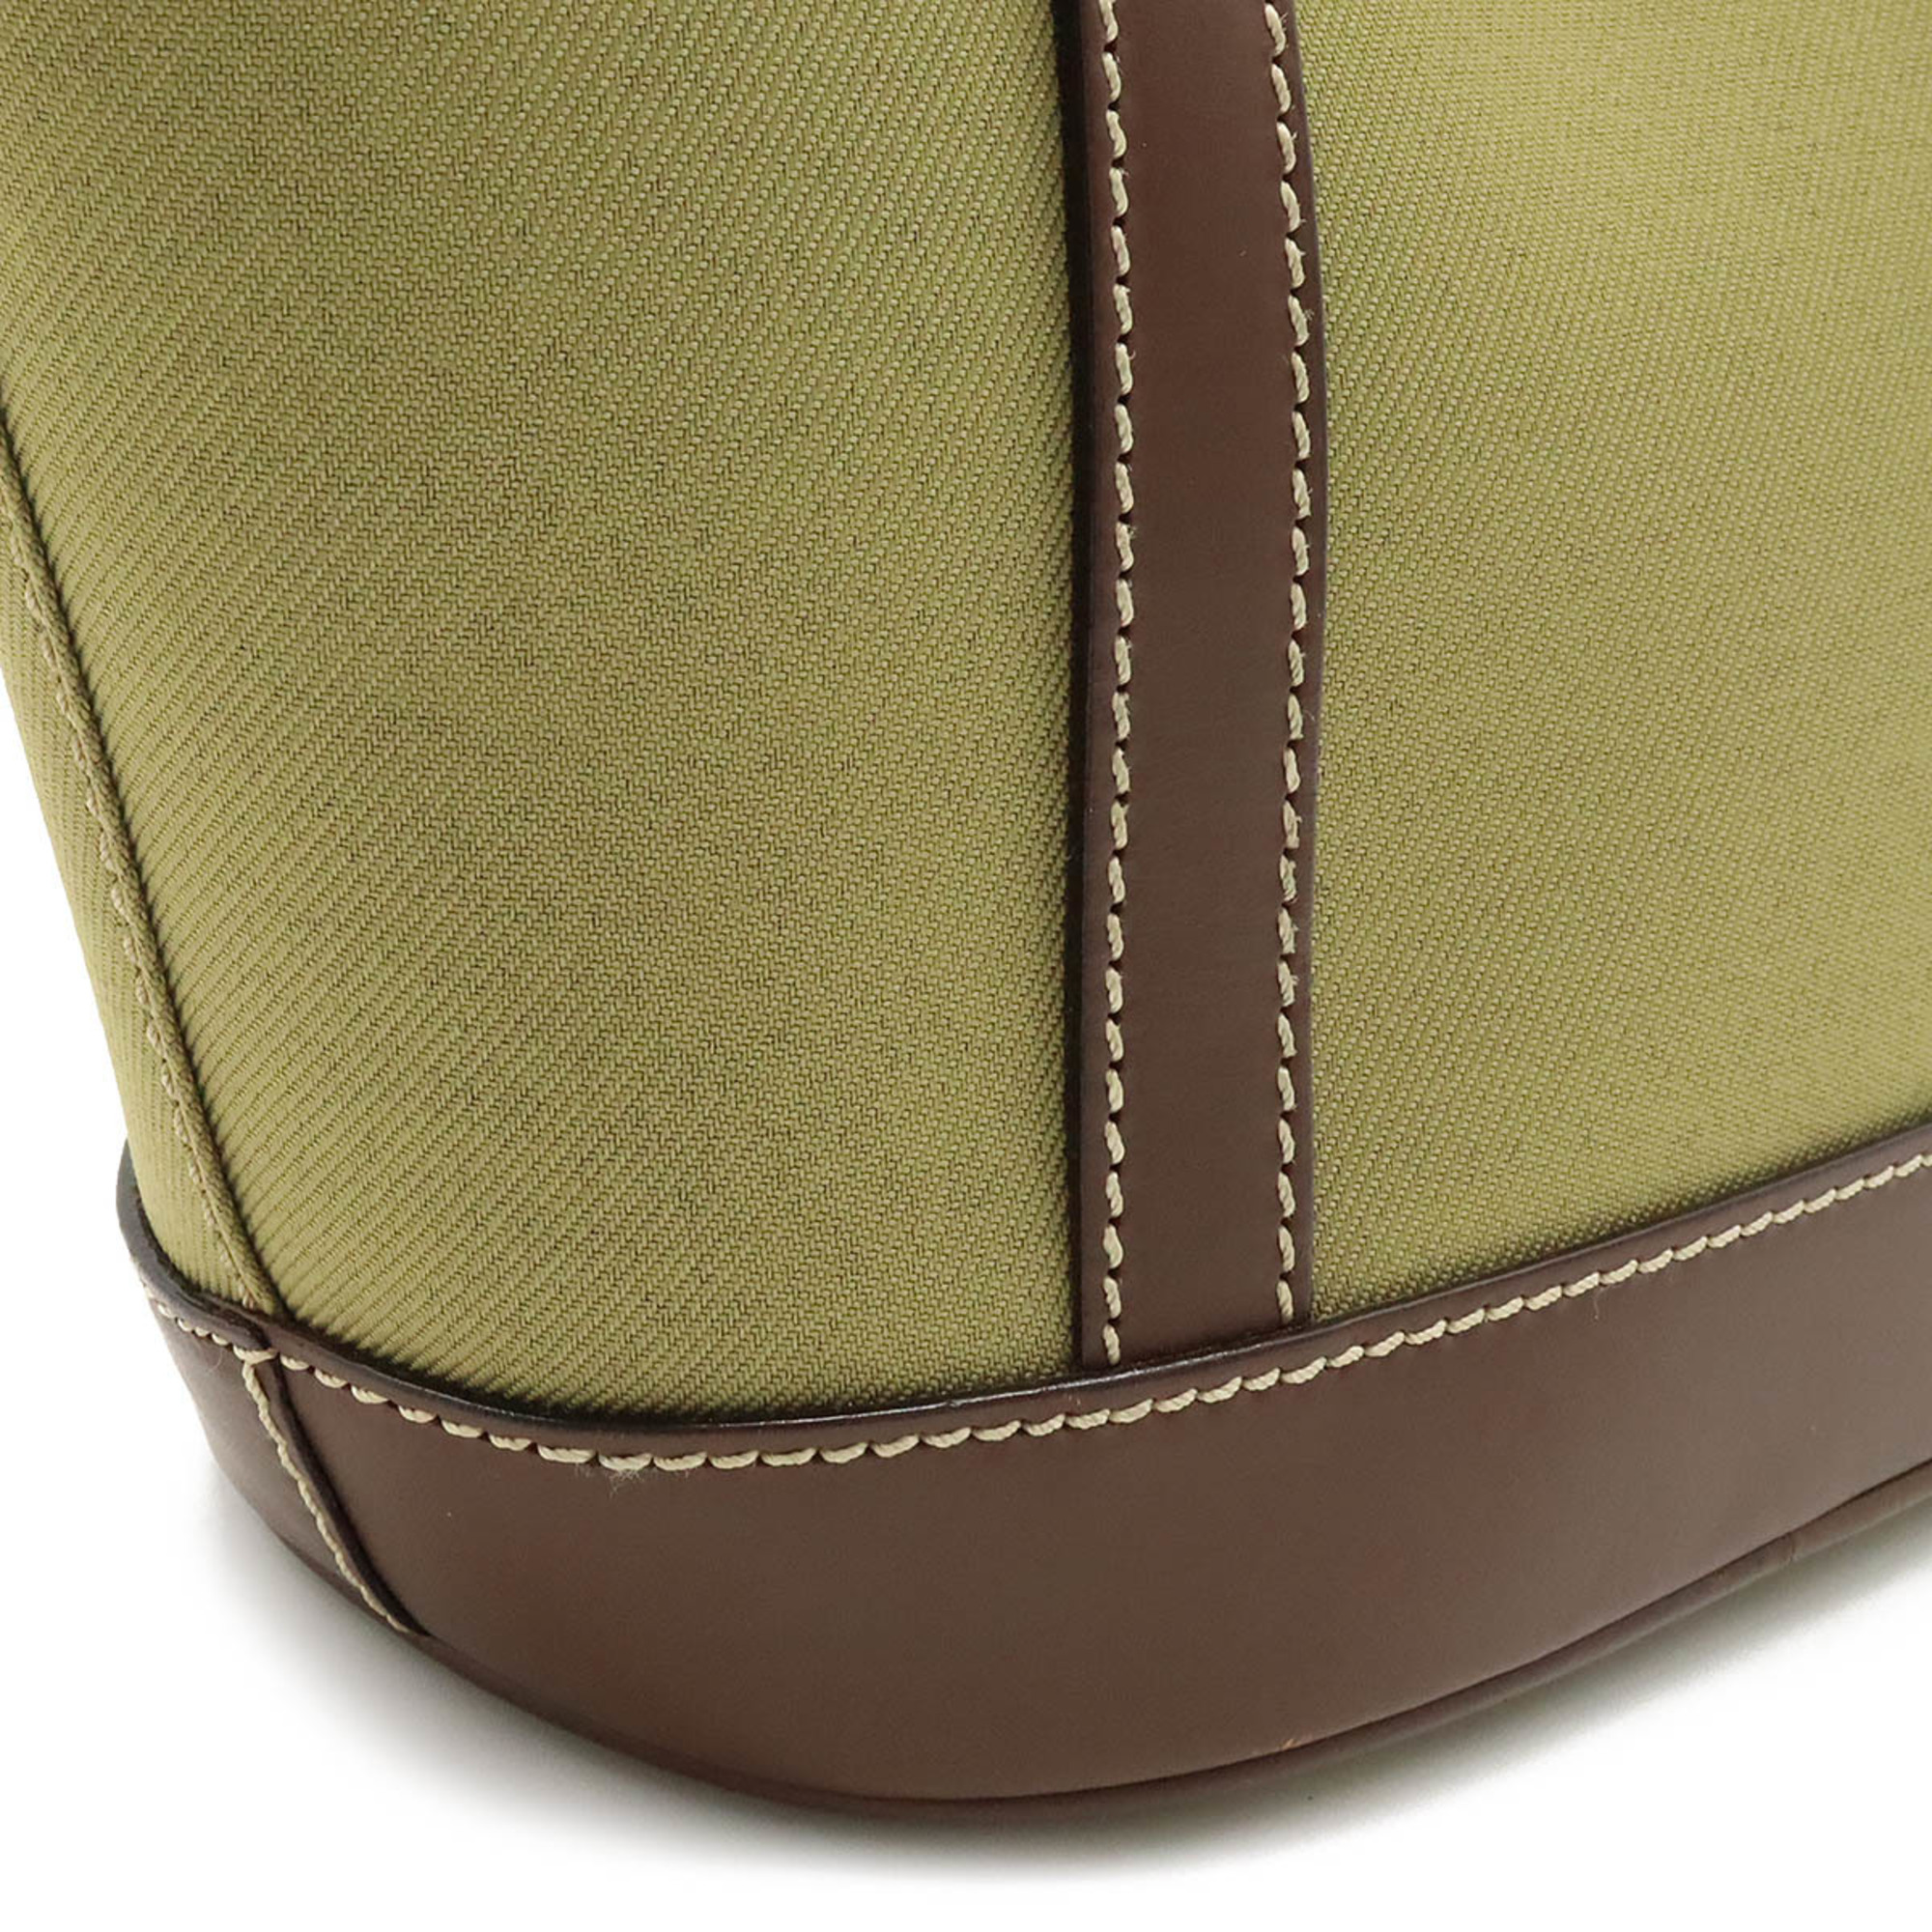 HUNTING WORLD Hunting World Tote Bag Shoulder Nylon Canvas Leather Khaki Dark Brown